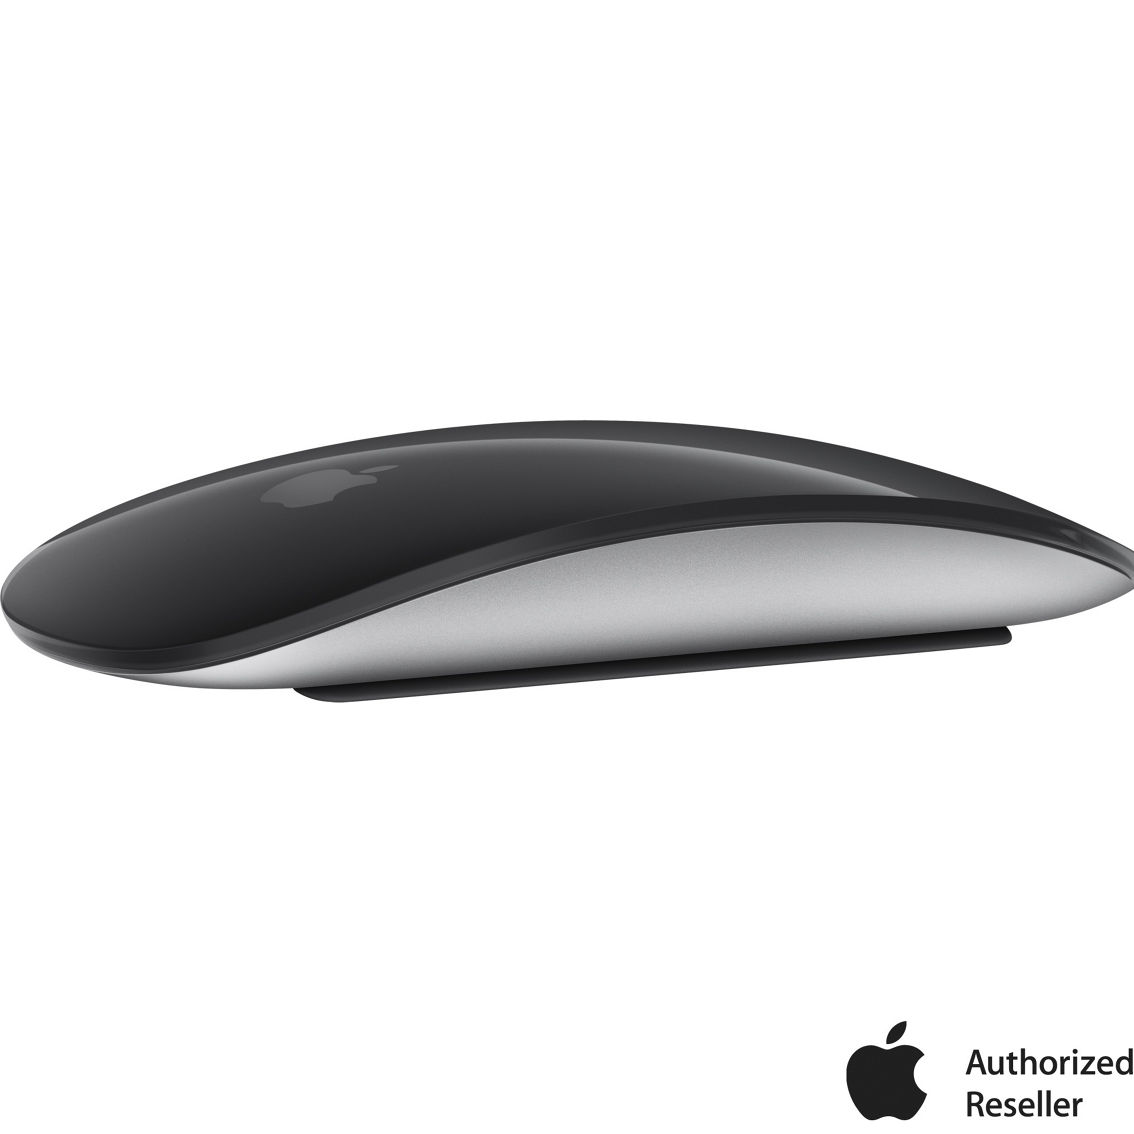 Apple Magic Mouse Black Multi-touch Surface | Apple Mac 